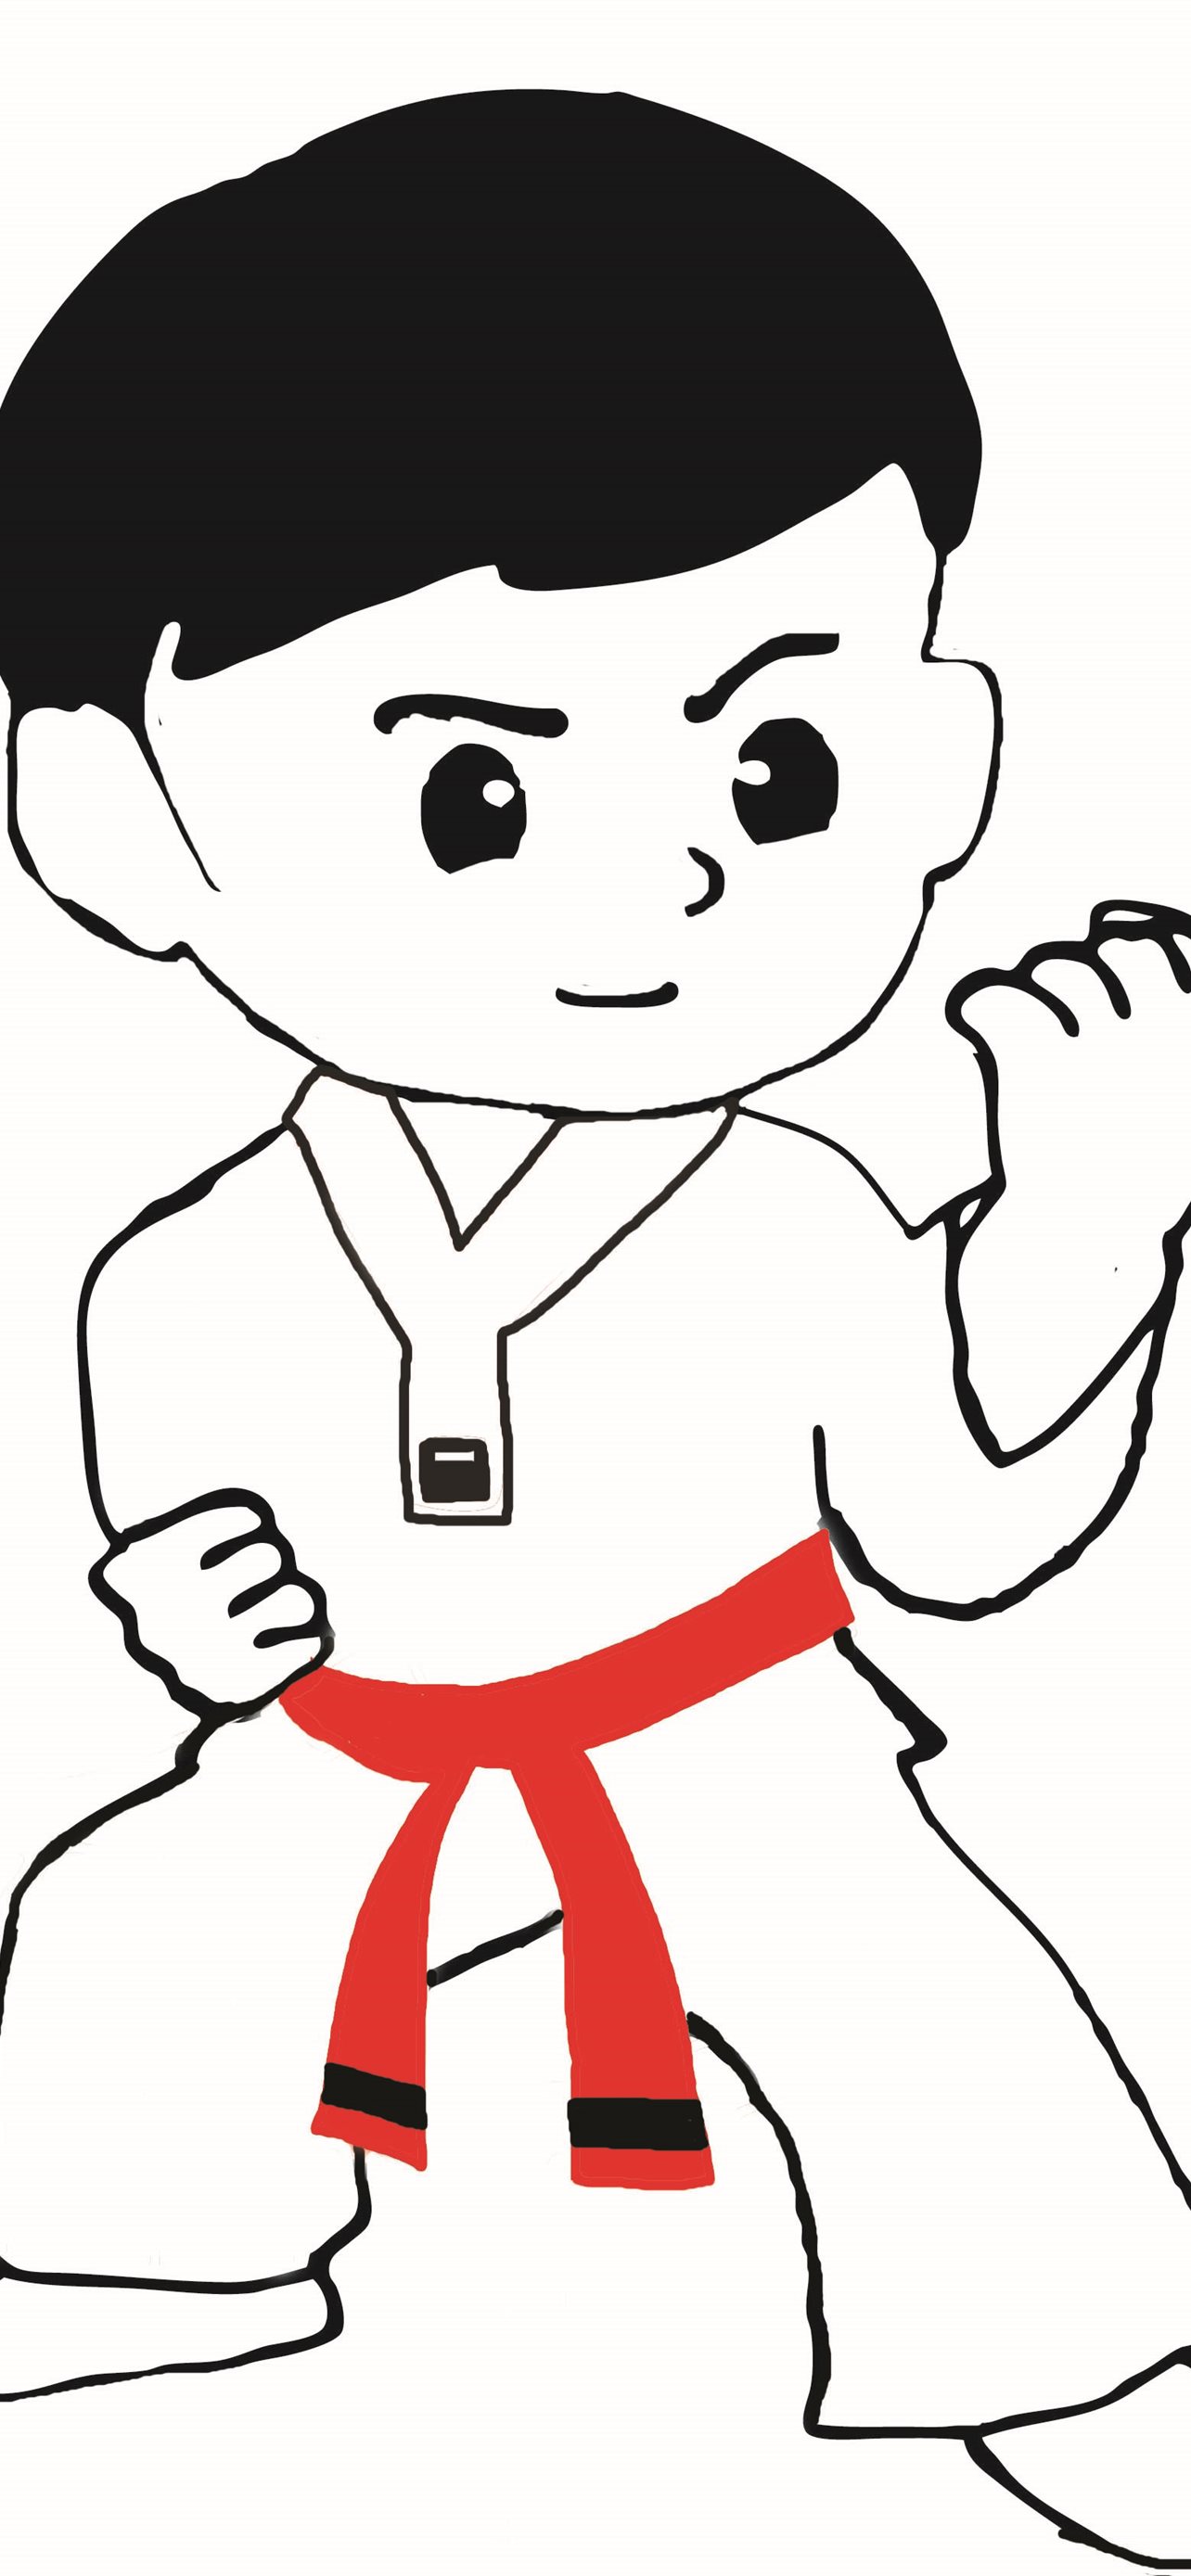 Taekwondo Cartoon Wallpapers